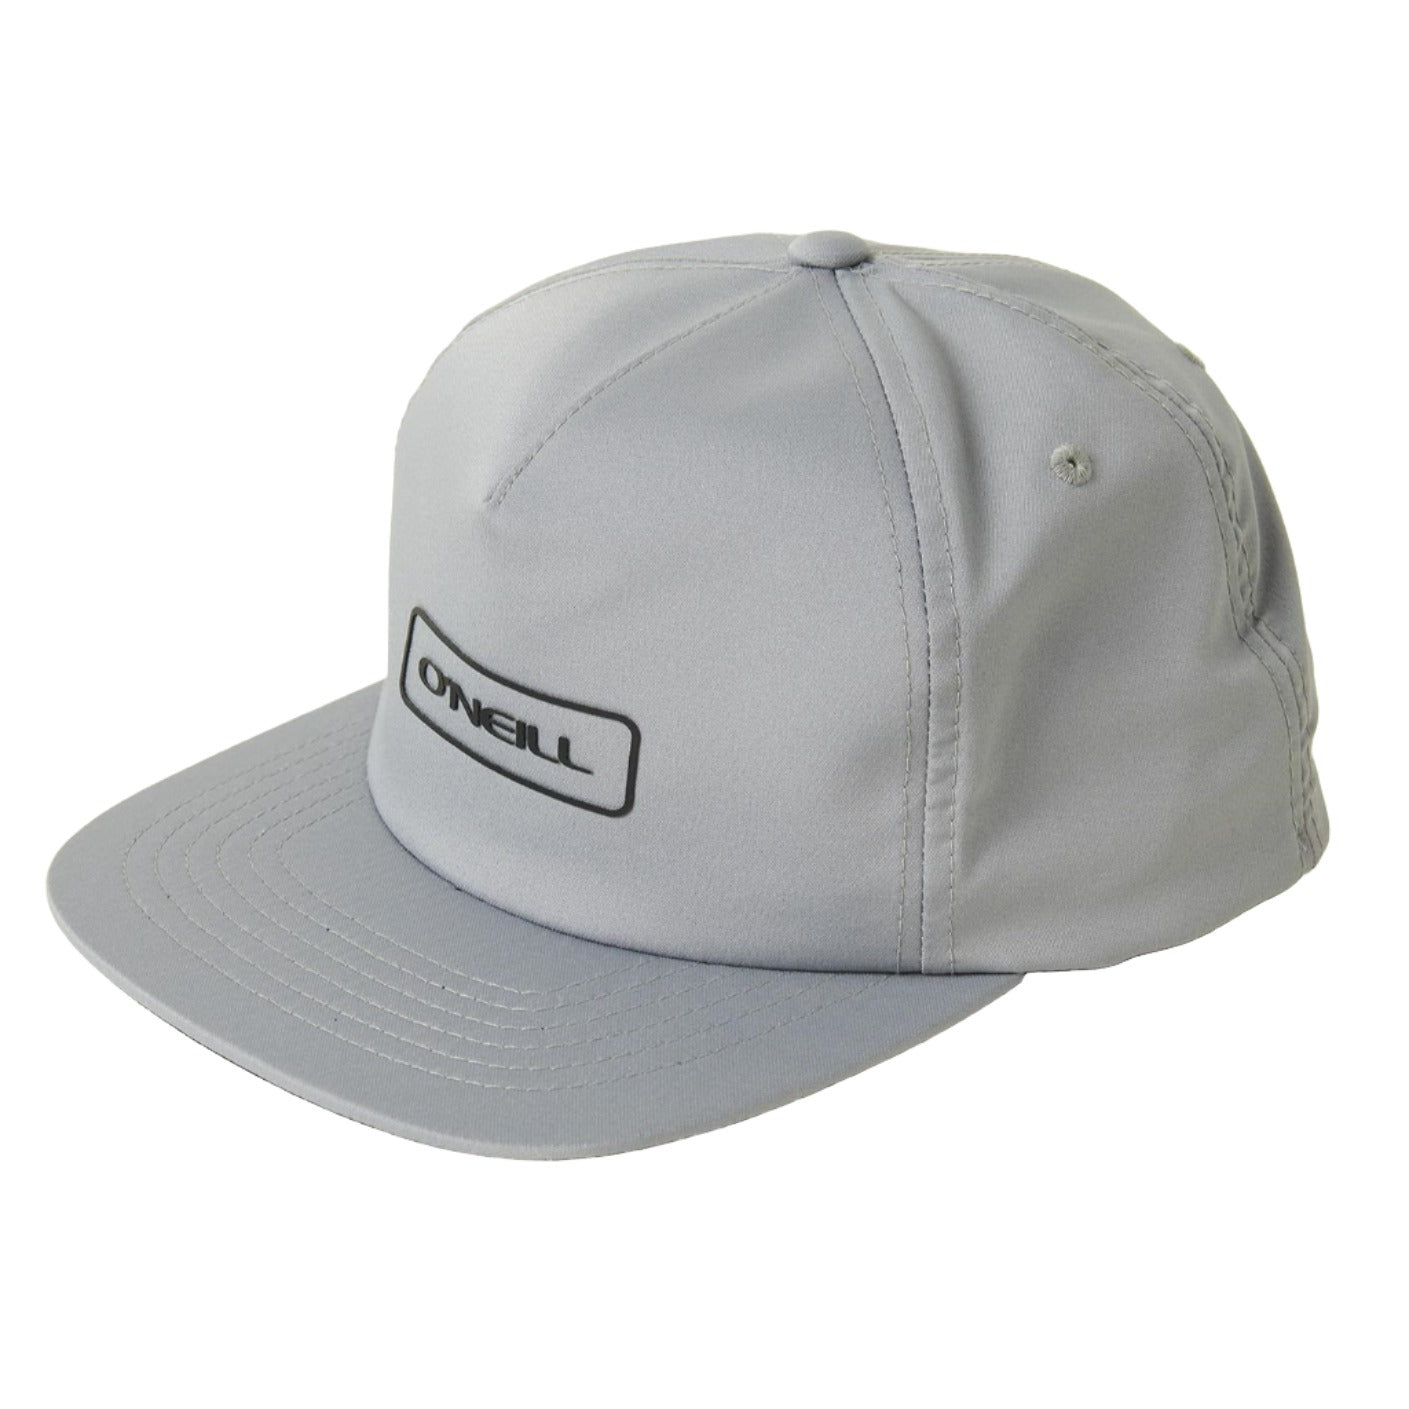 O'Neill Hybrid Snapback Hat